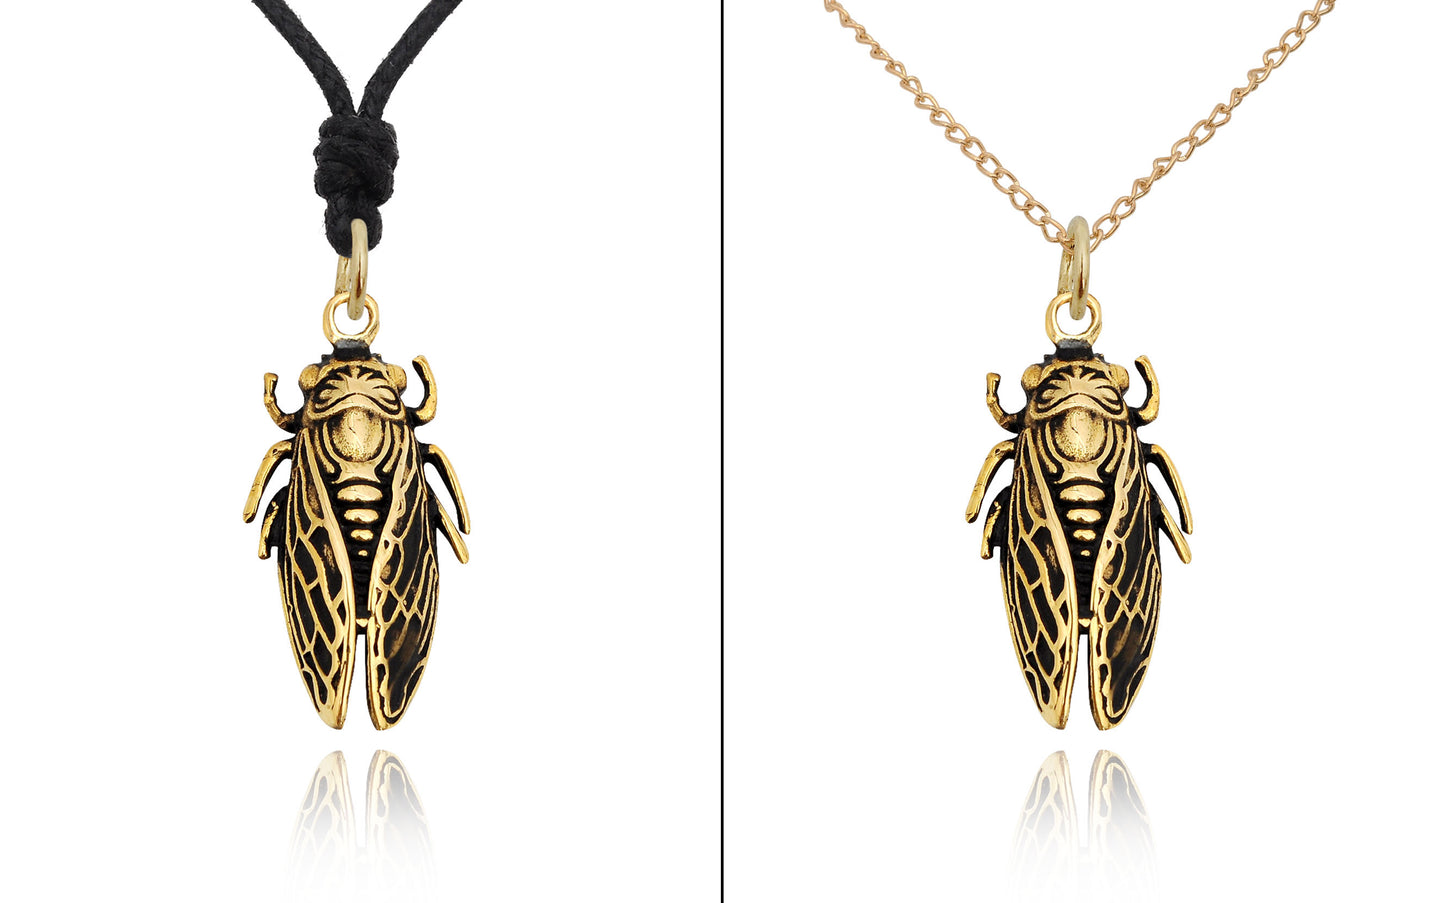 Locust Insect Handmade Brass Necklace Pendant Jewelry